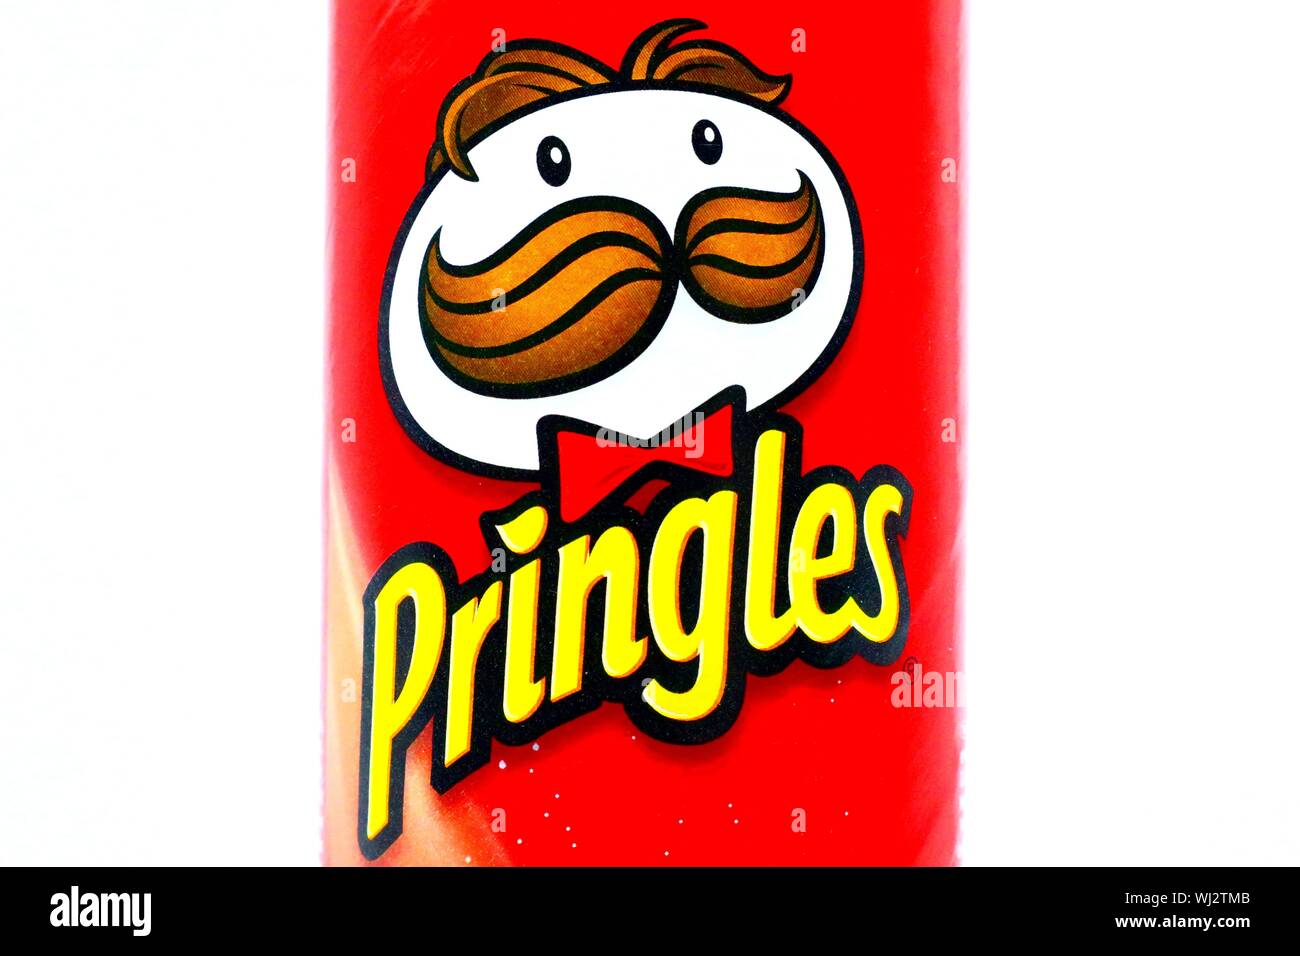 PRINGLES Original, Potato Chips on white background Stock Photo - Alamy